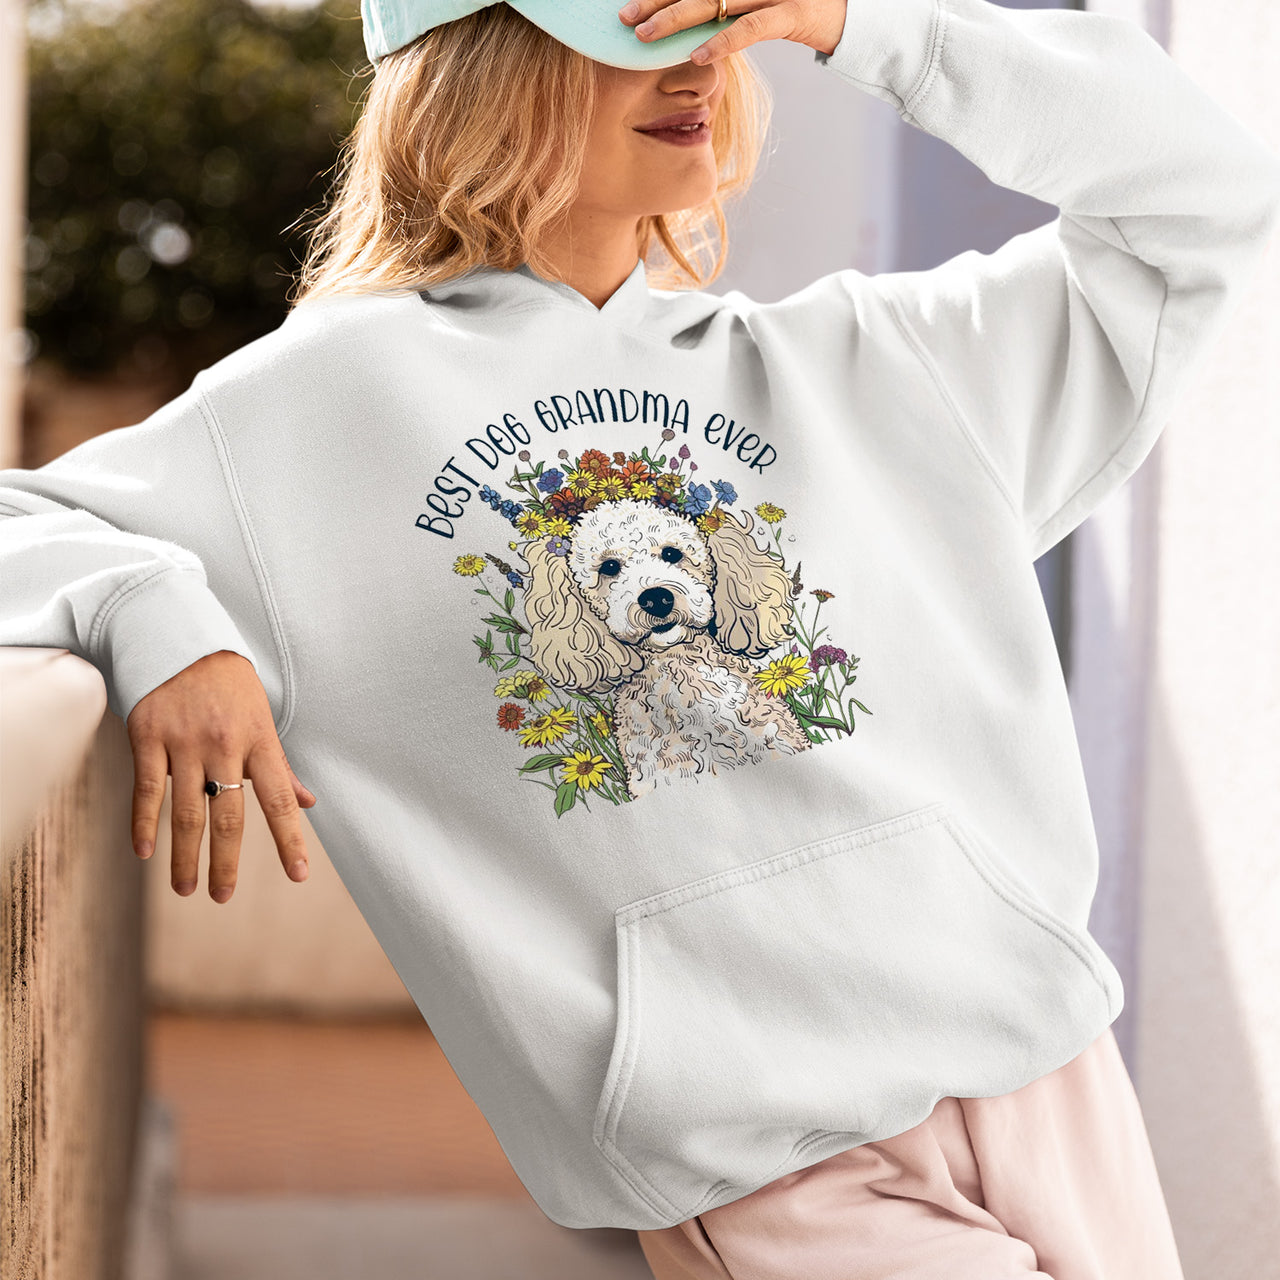 Poodle Dog T-shirt, Pet Lover Shirt, Dog Lover Shirt, Best Dog Grandma Ever T-Shirt, Dog Owner Shirt, Gift For Dog Grandma, Funny Dog Shirts, Women Dog T-Shirt, Mother's Day Gift, Dog Lover Wife Gifts, Dog Shirt